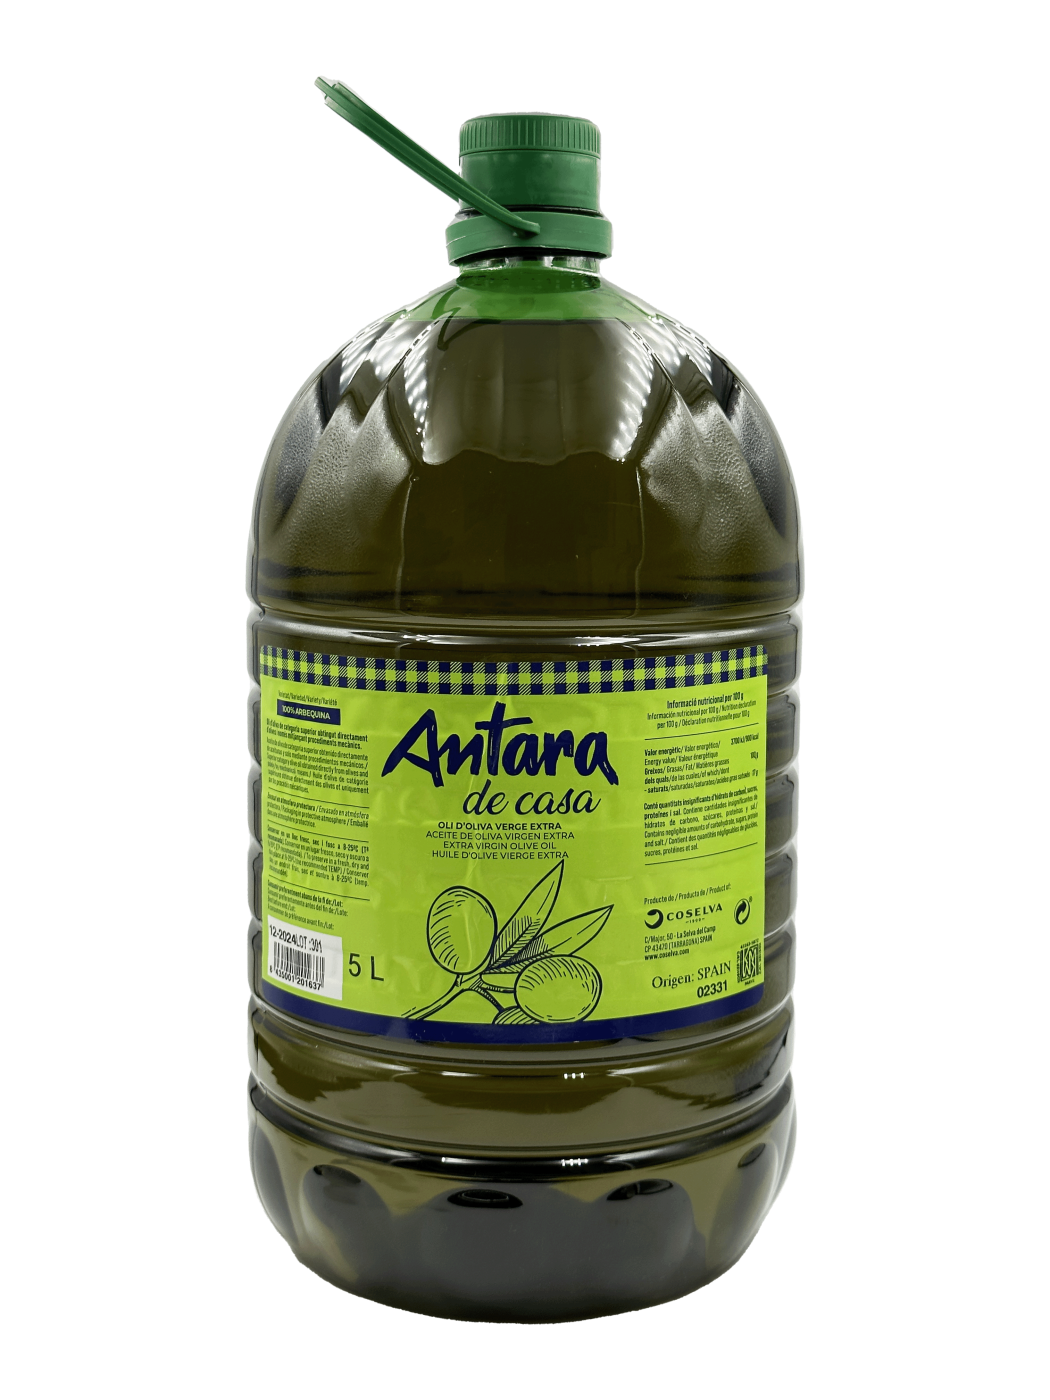 EXTRA VIRGIN OLIVE OIL ANTARA DE CASA 5L